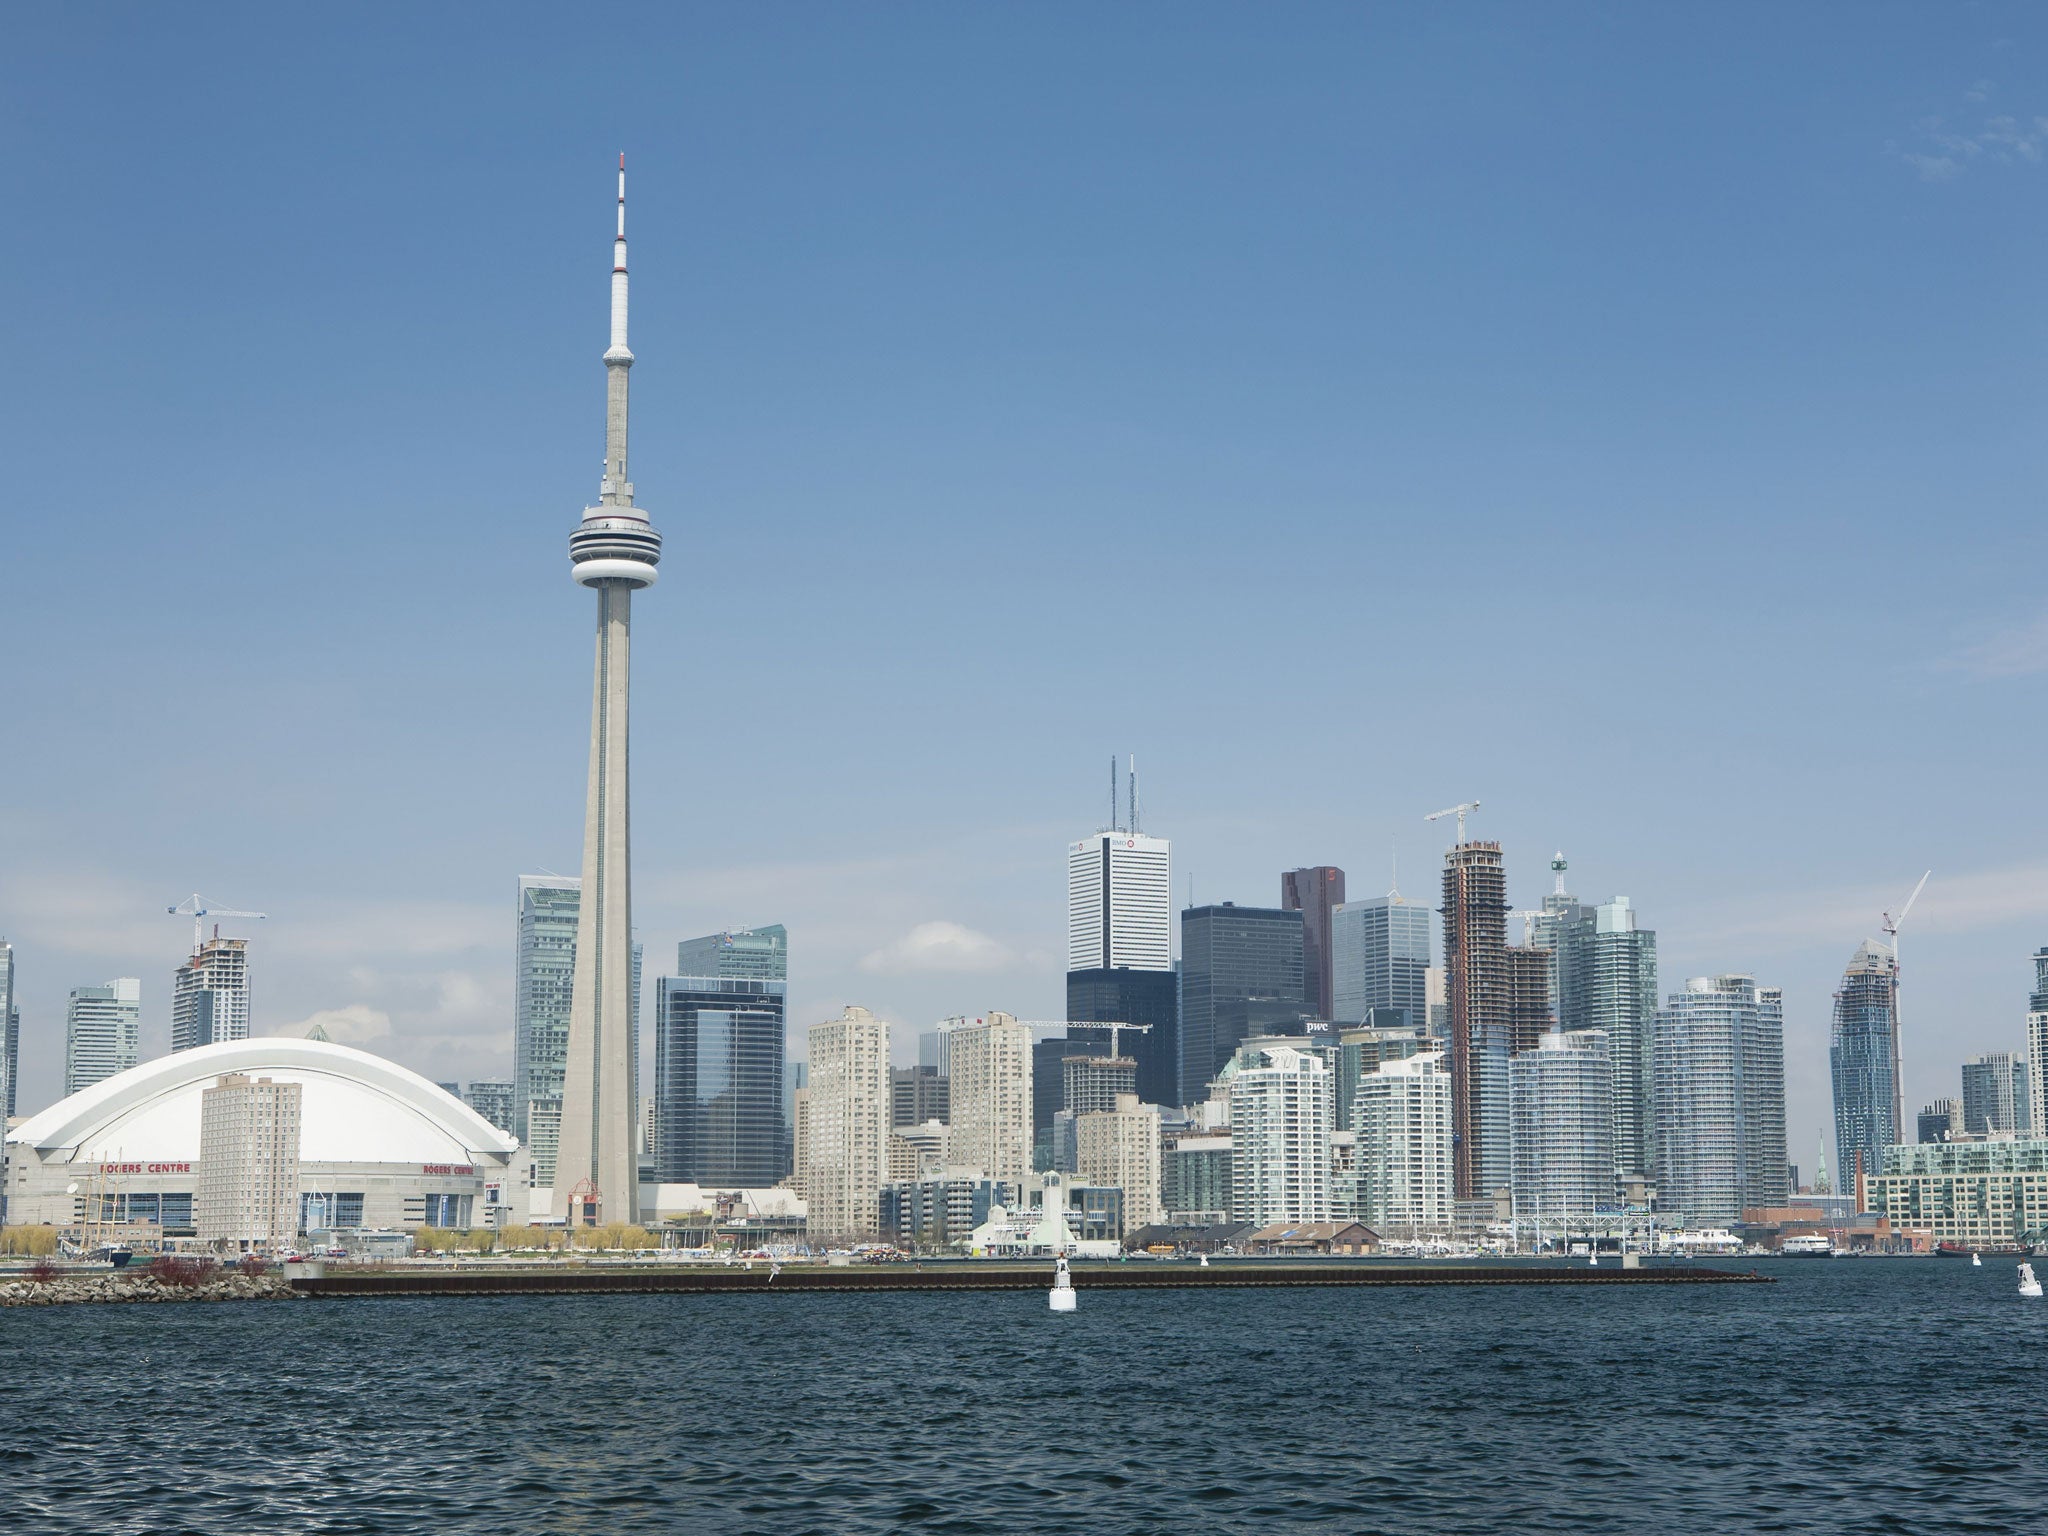 The Toronto skyline seen from Lake Ontario